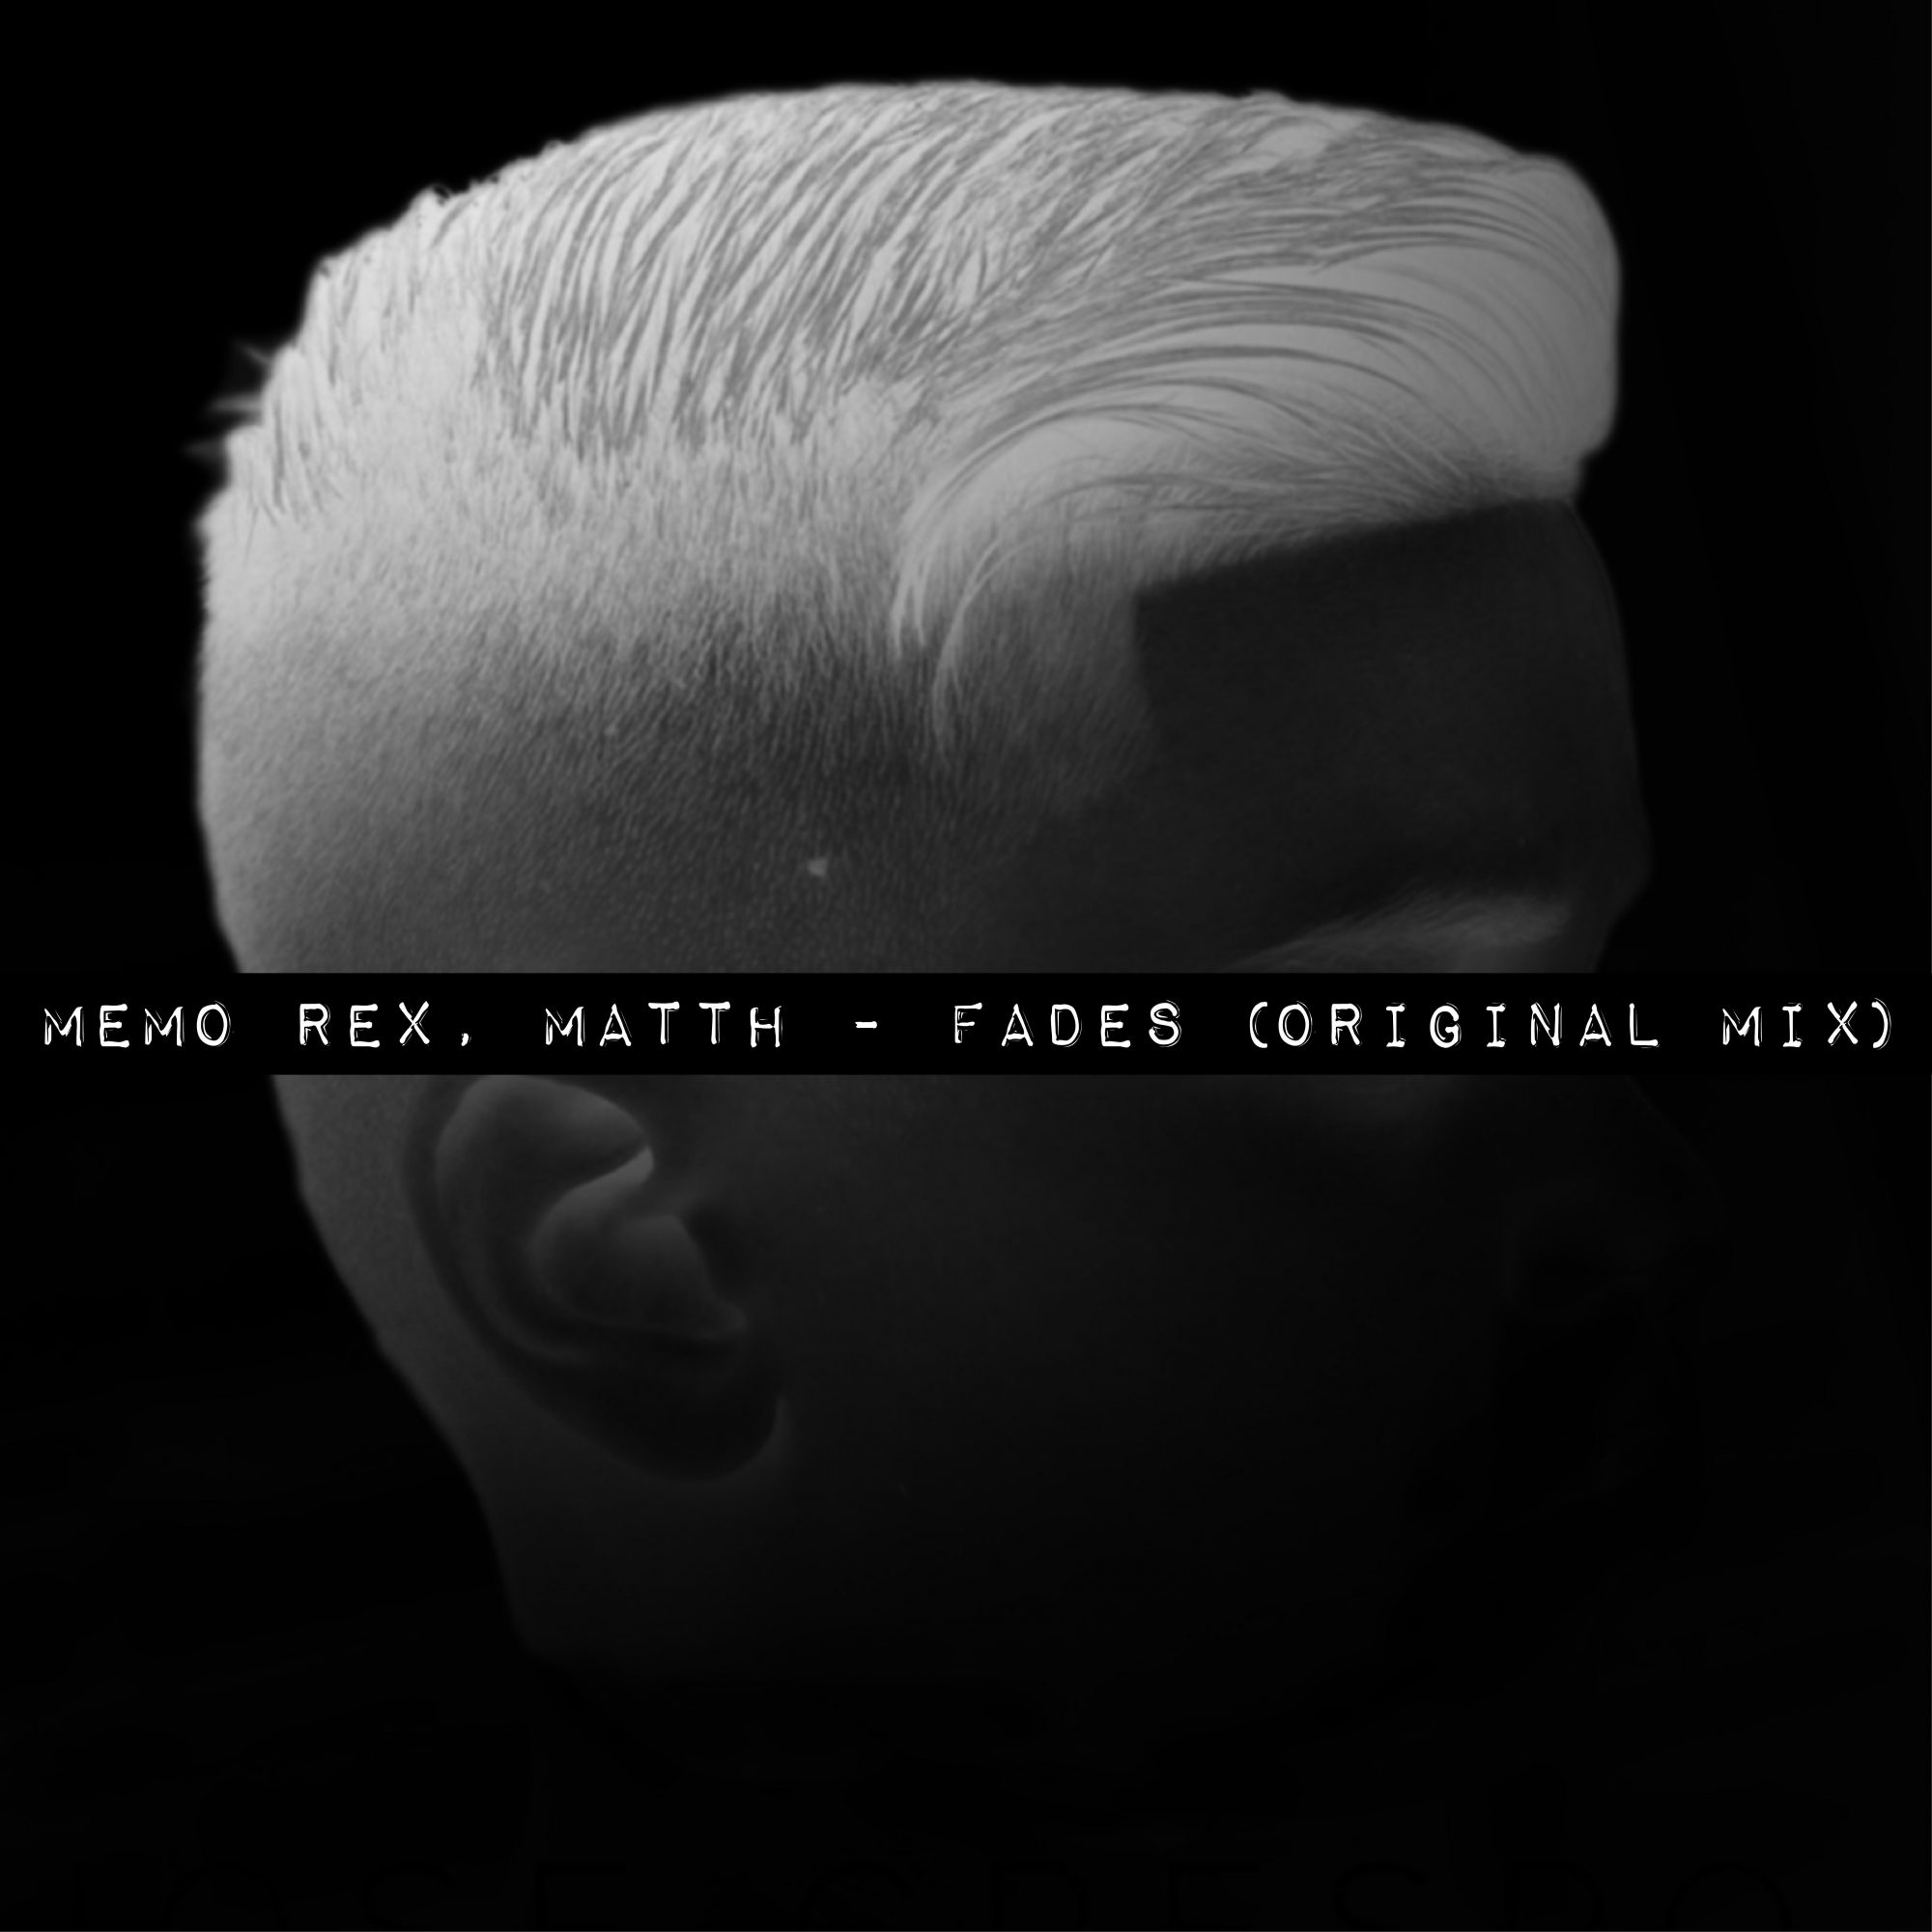 Memo Rex, Matth - Fades